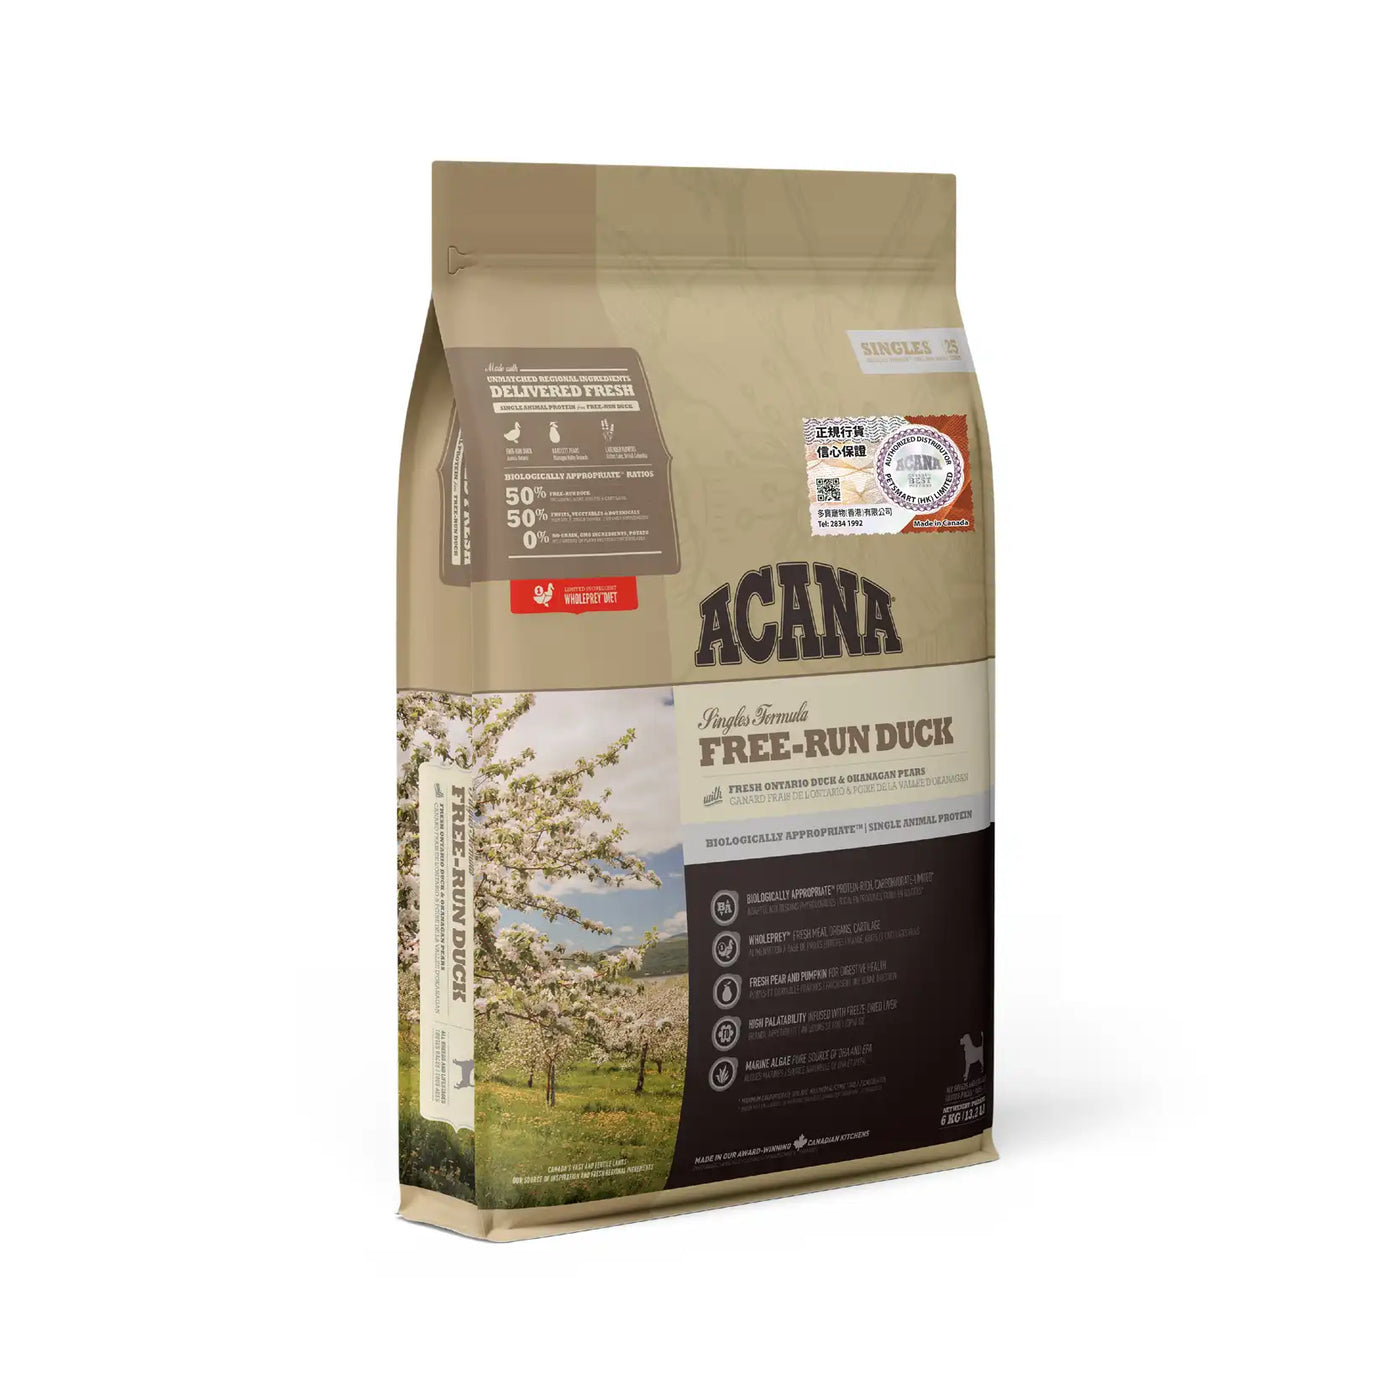 Acana - Single Protein Free Run Duck Grain Free Dog Food